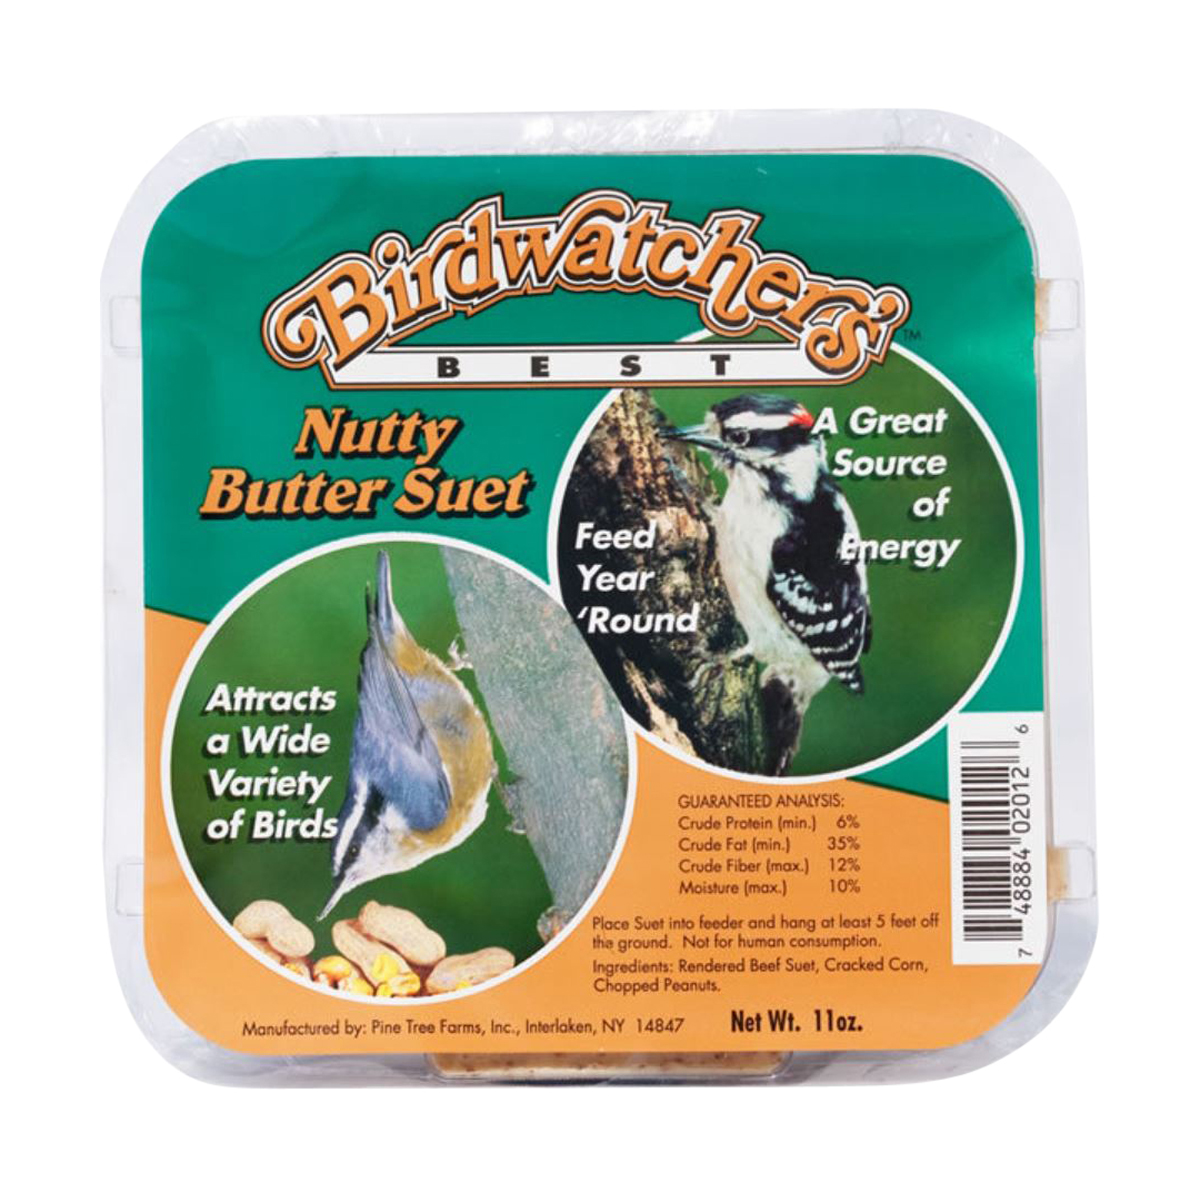 Birdwatcher's Best Nutty Butter Suet - 11 oz